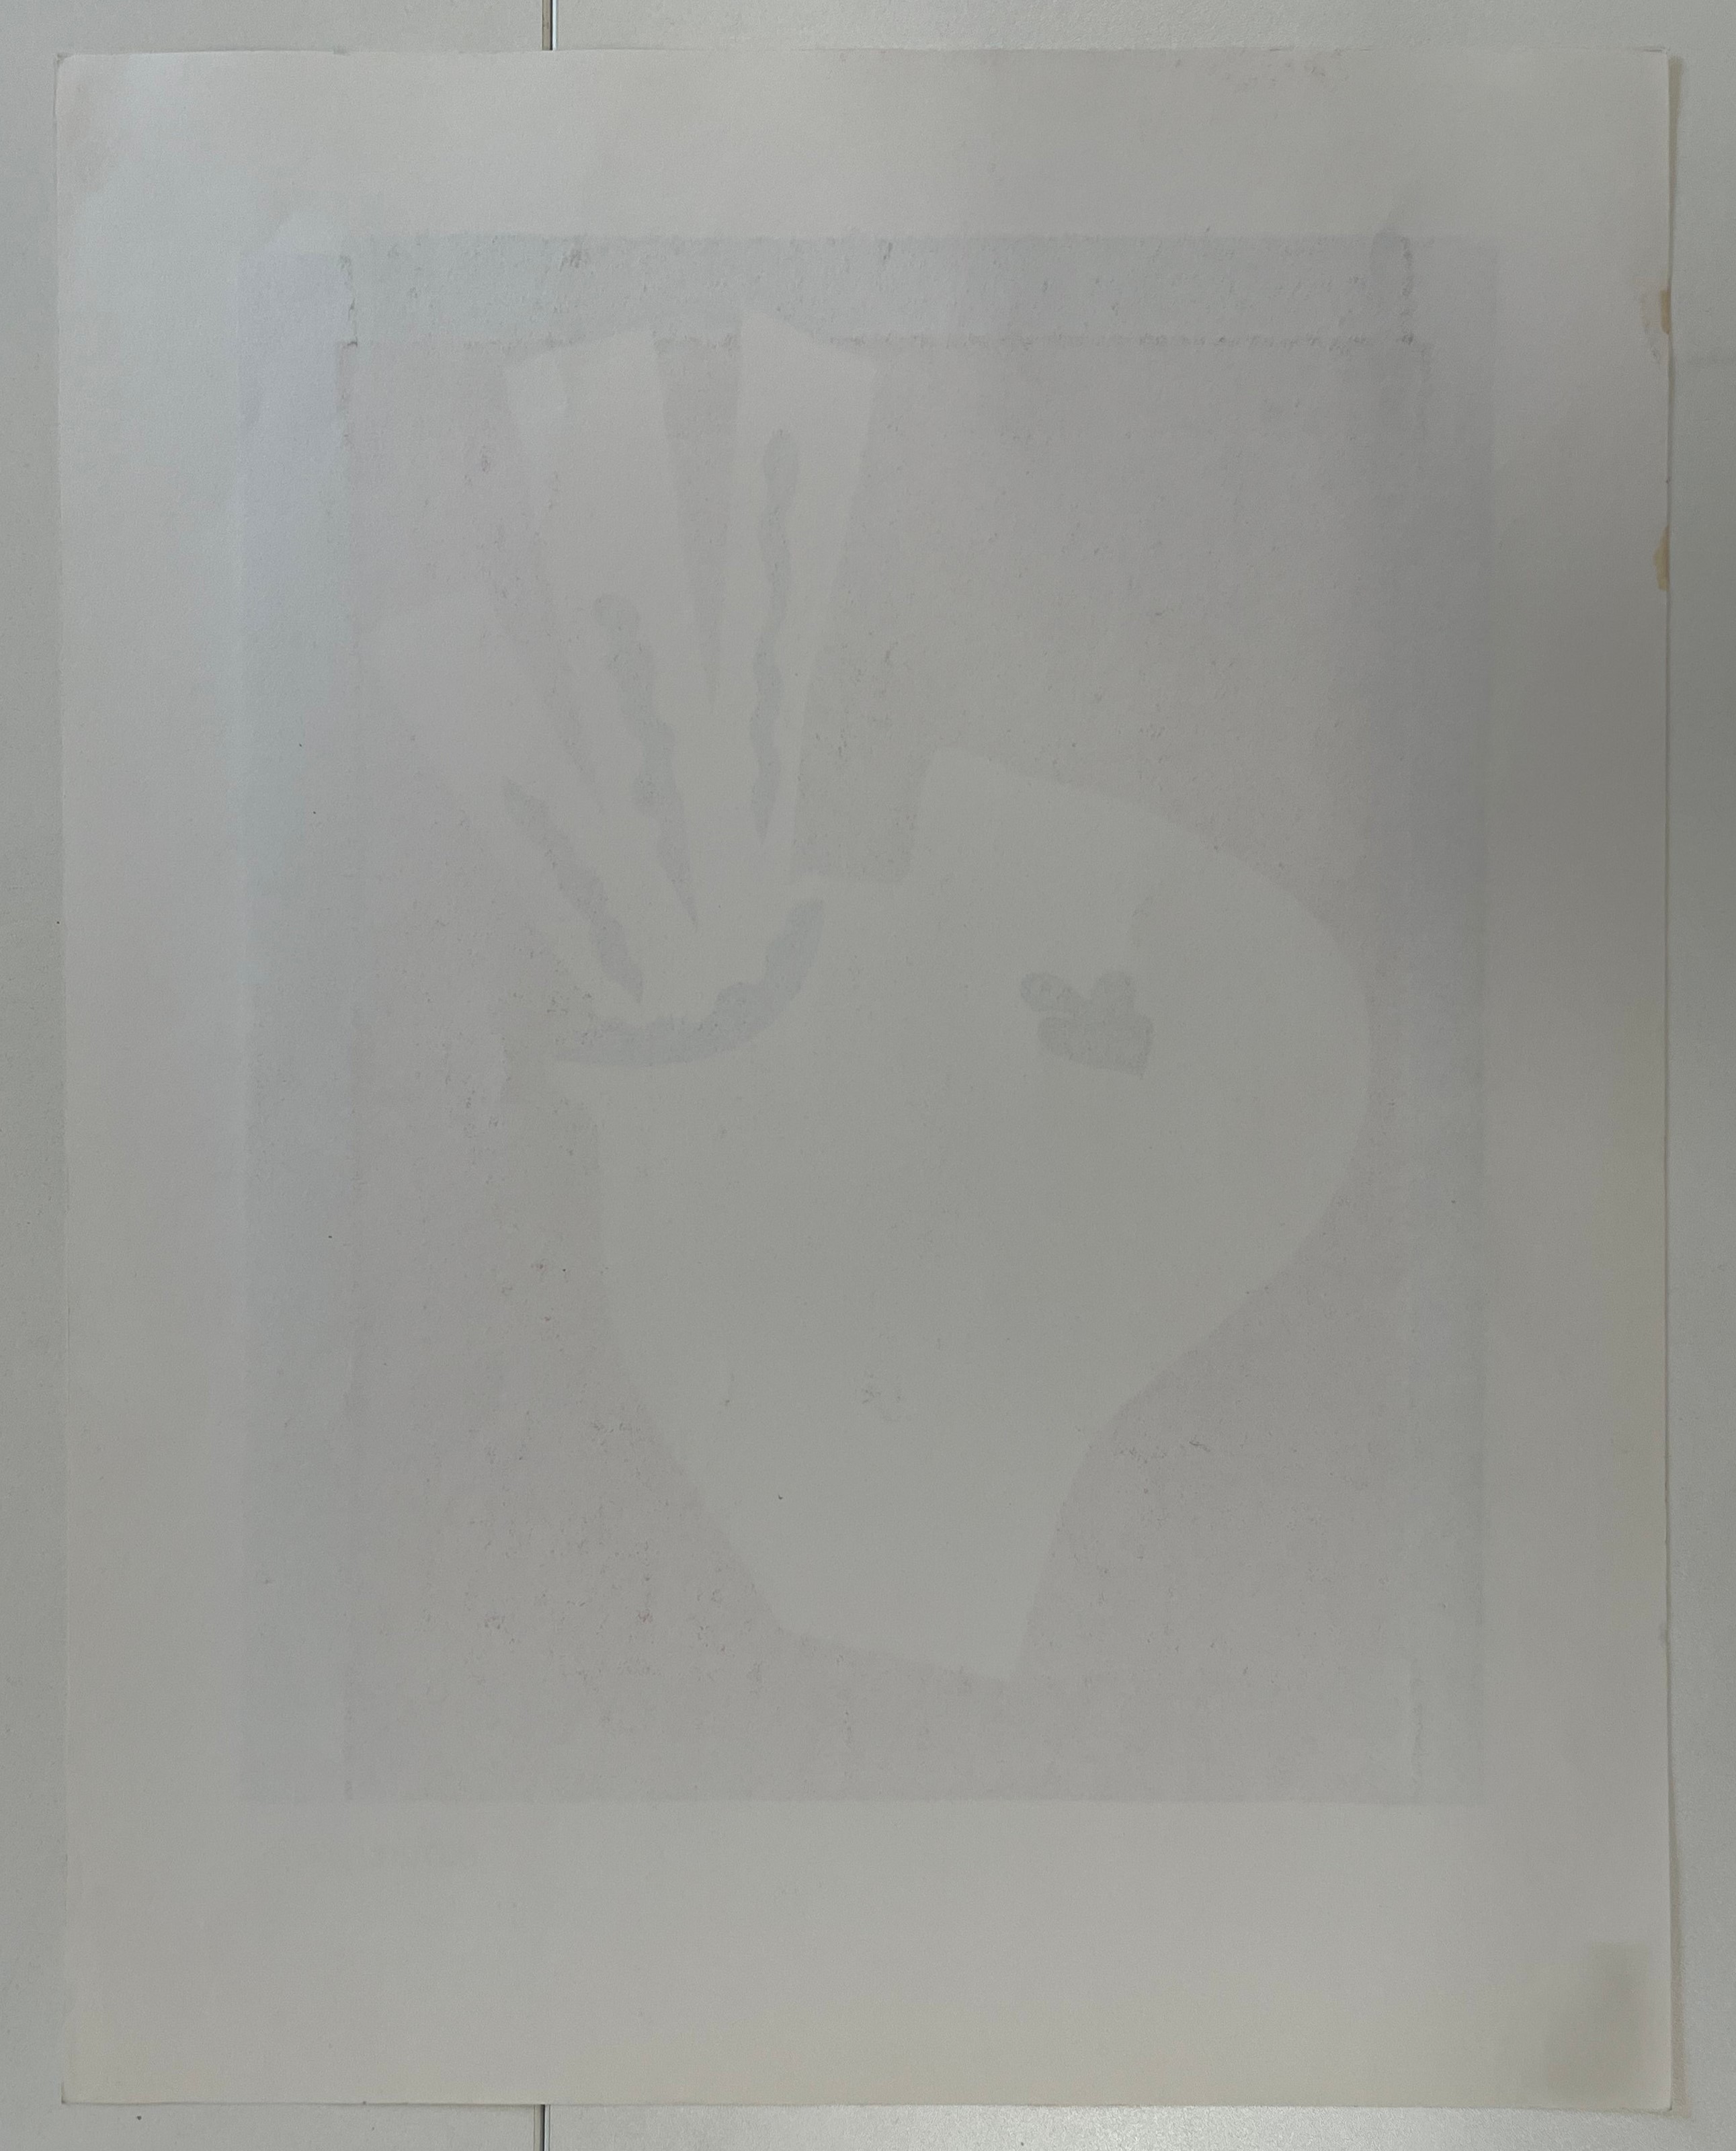 SIX VINTAGE LITHOGRAPHS ON PAPER AFTER HENRI MATISSE - Image 15 of 19